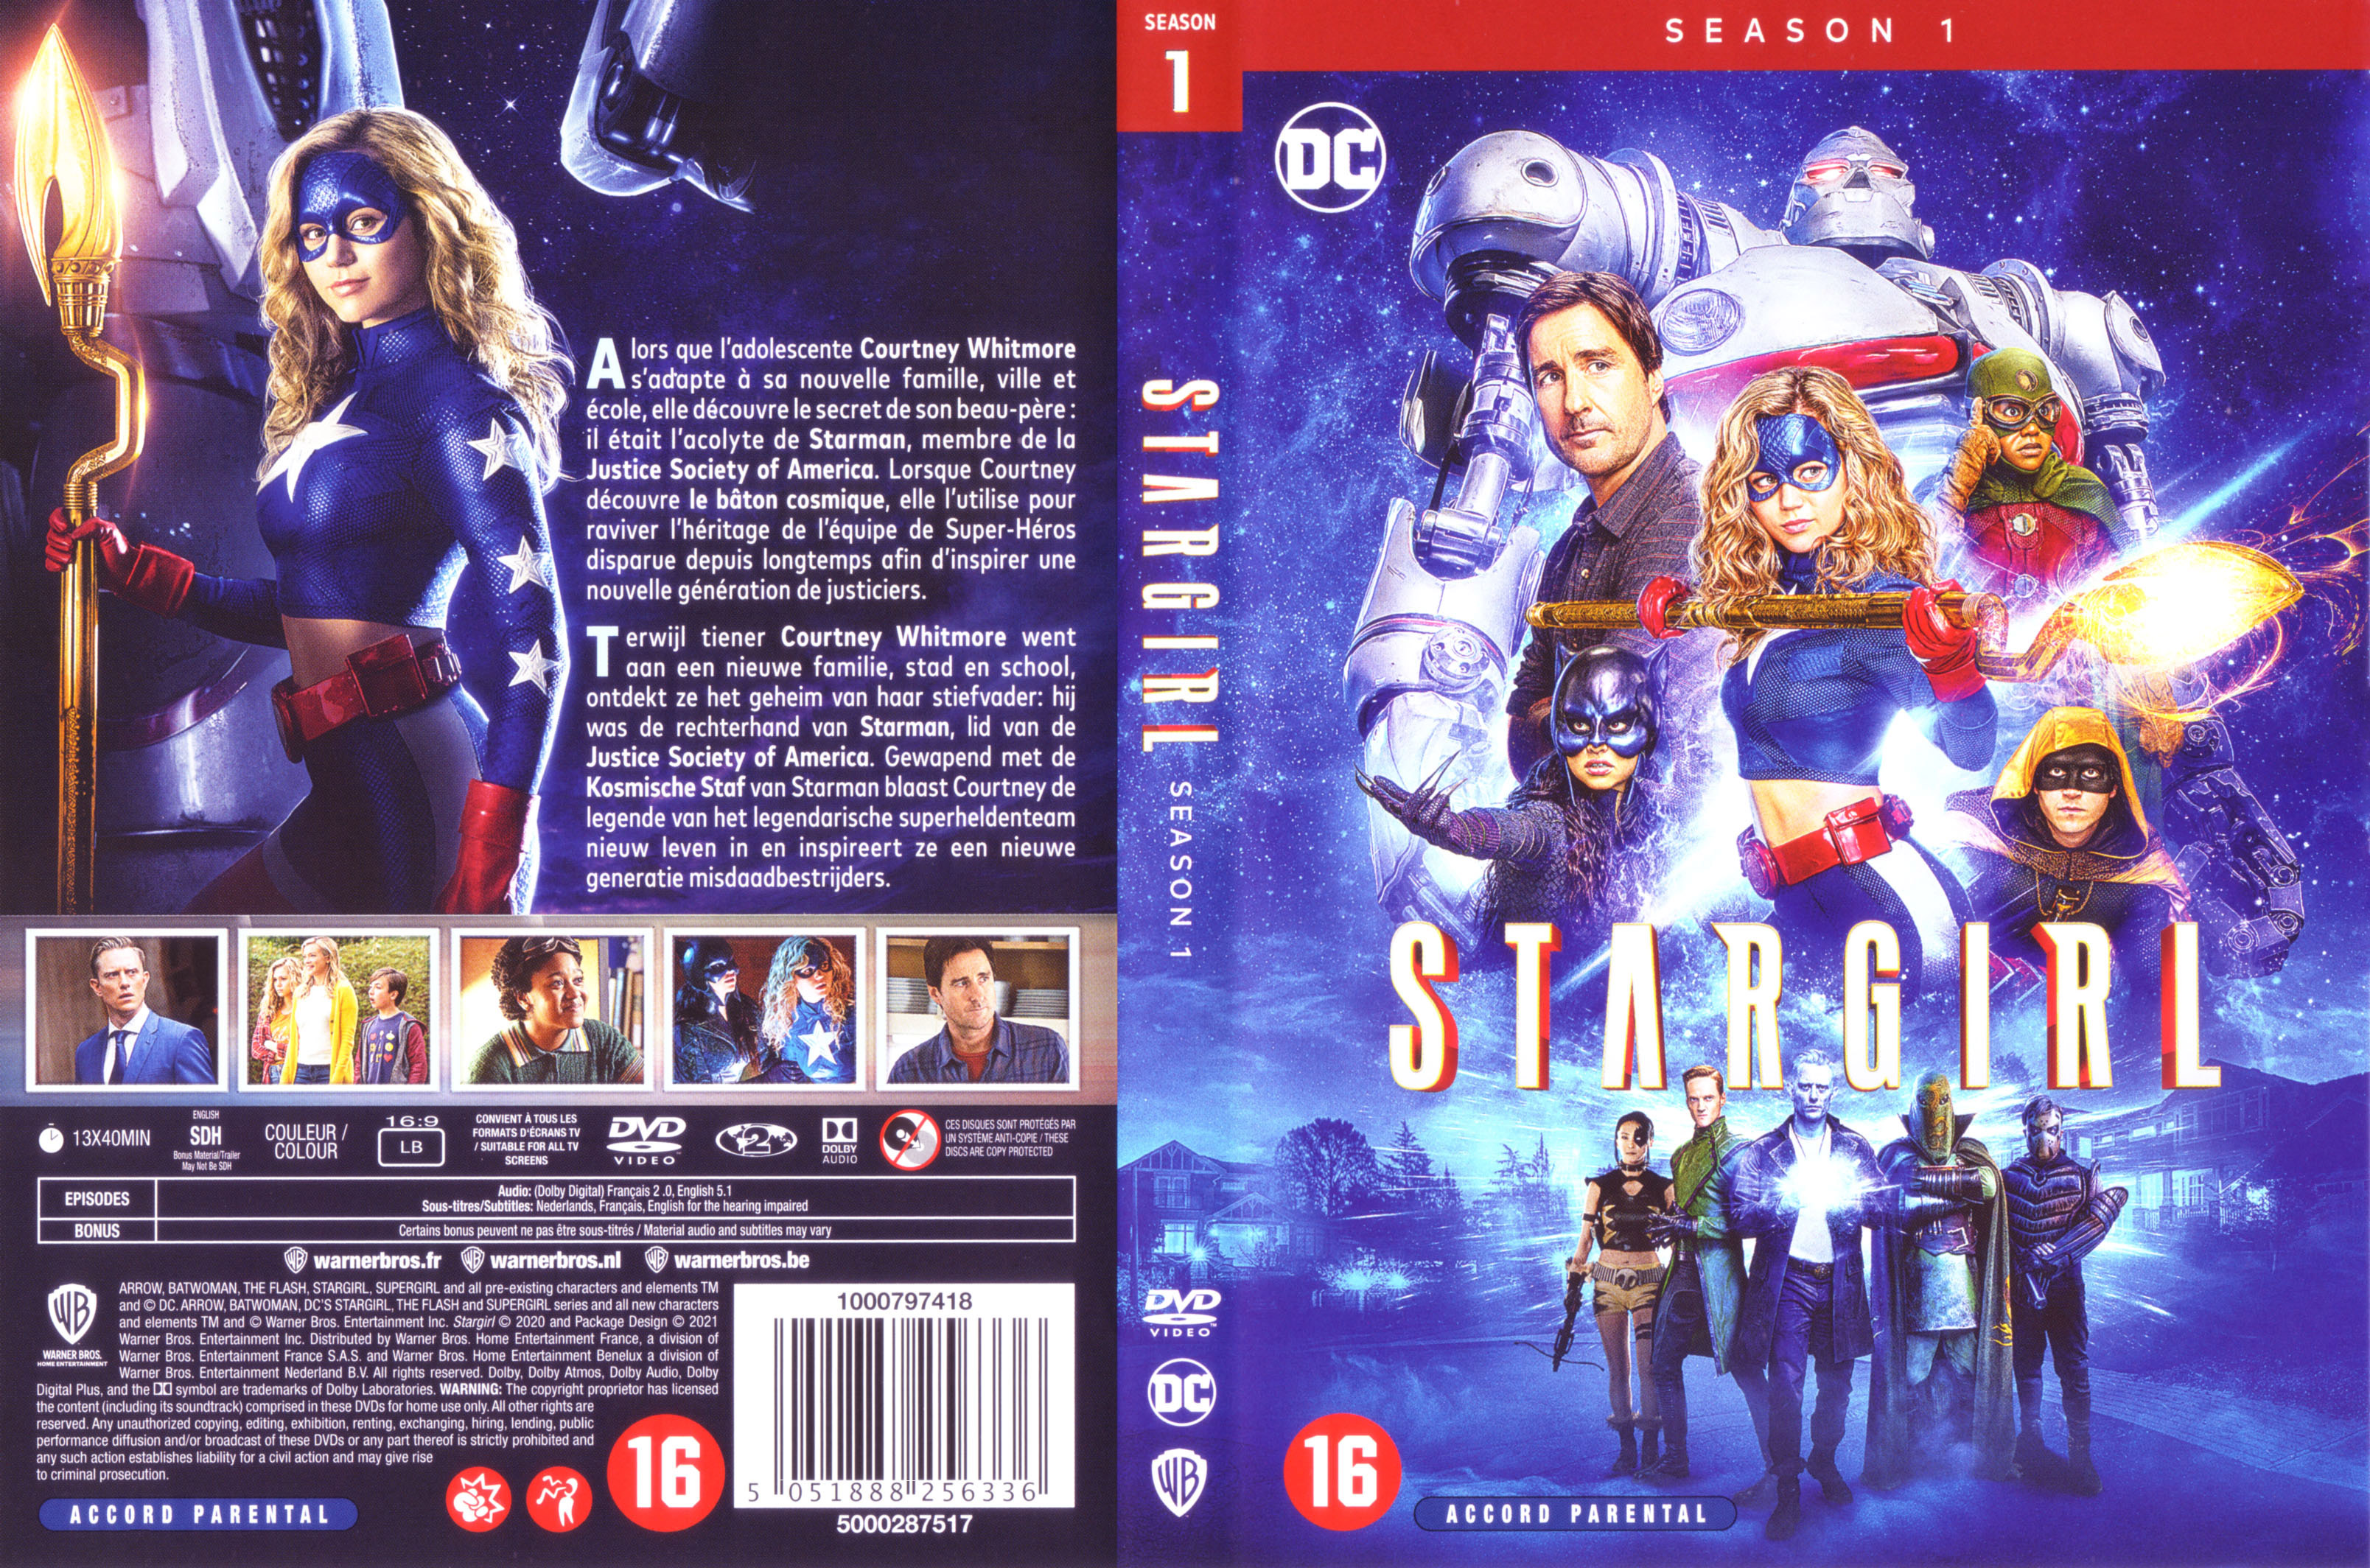 Jaquette DVD Stargirl Saison 1